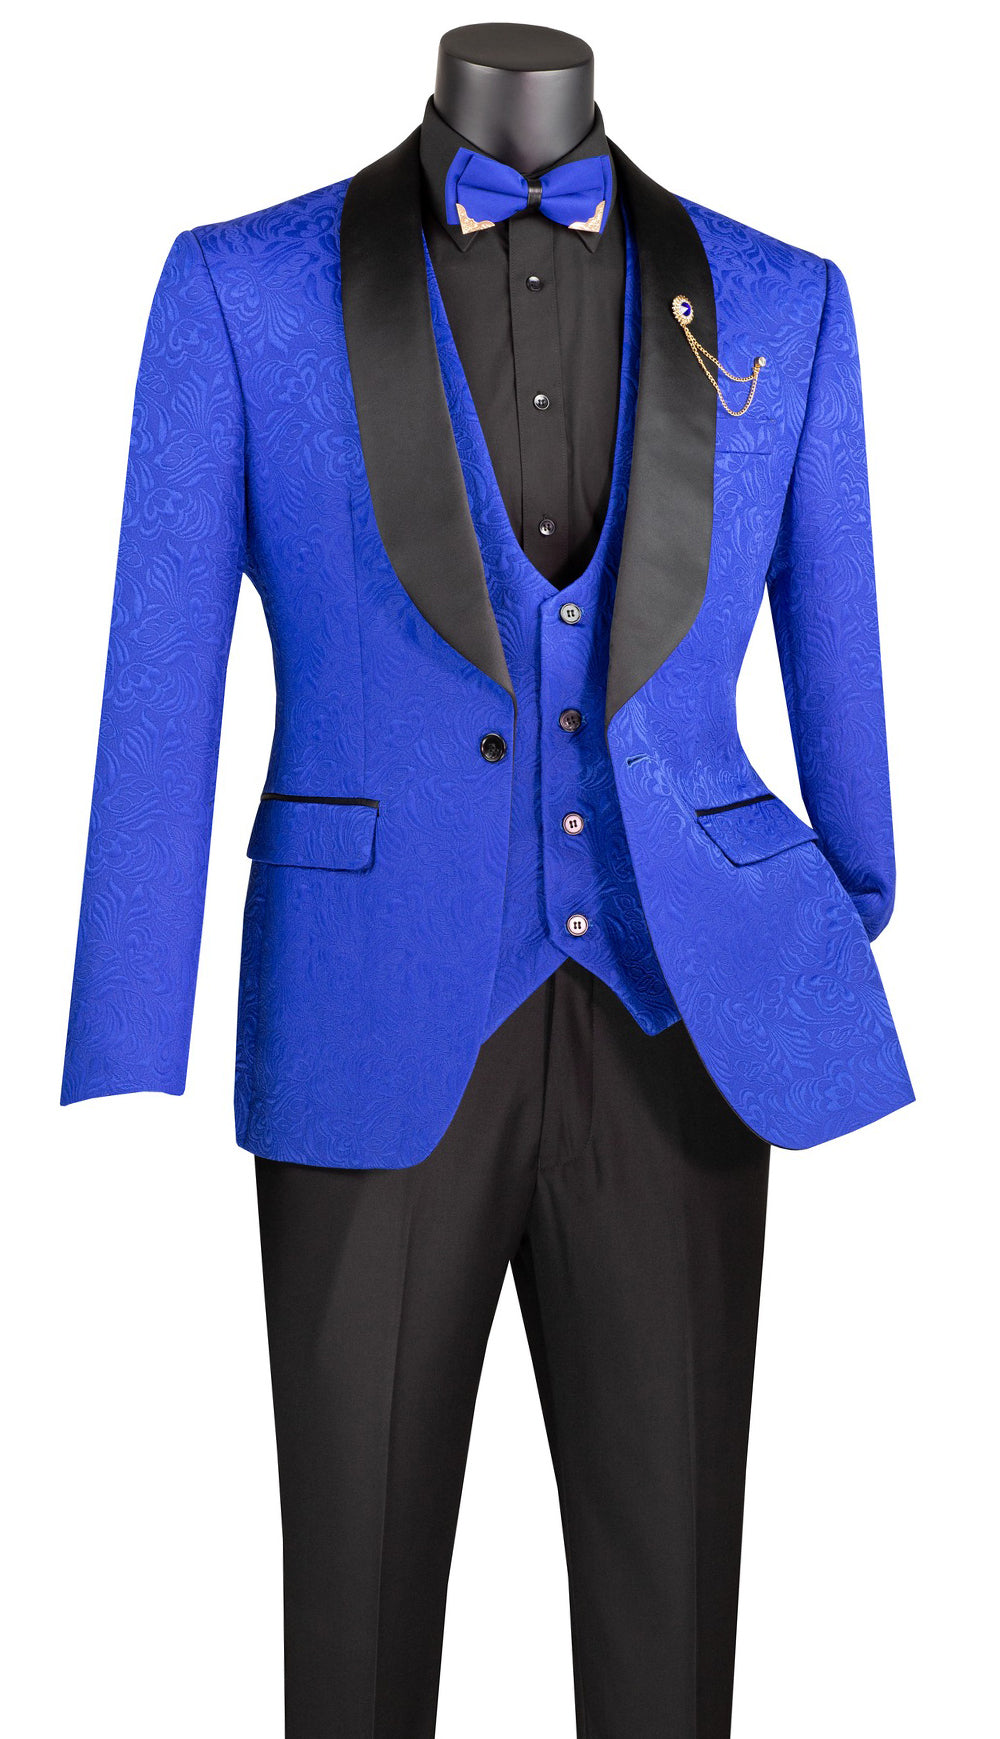 Vinci Tuxedo TVSJ-1C-Royal - Church Suits For Less